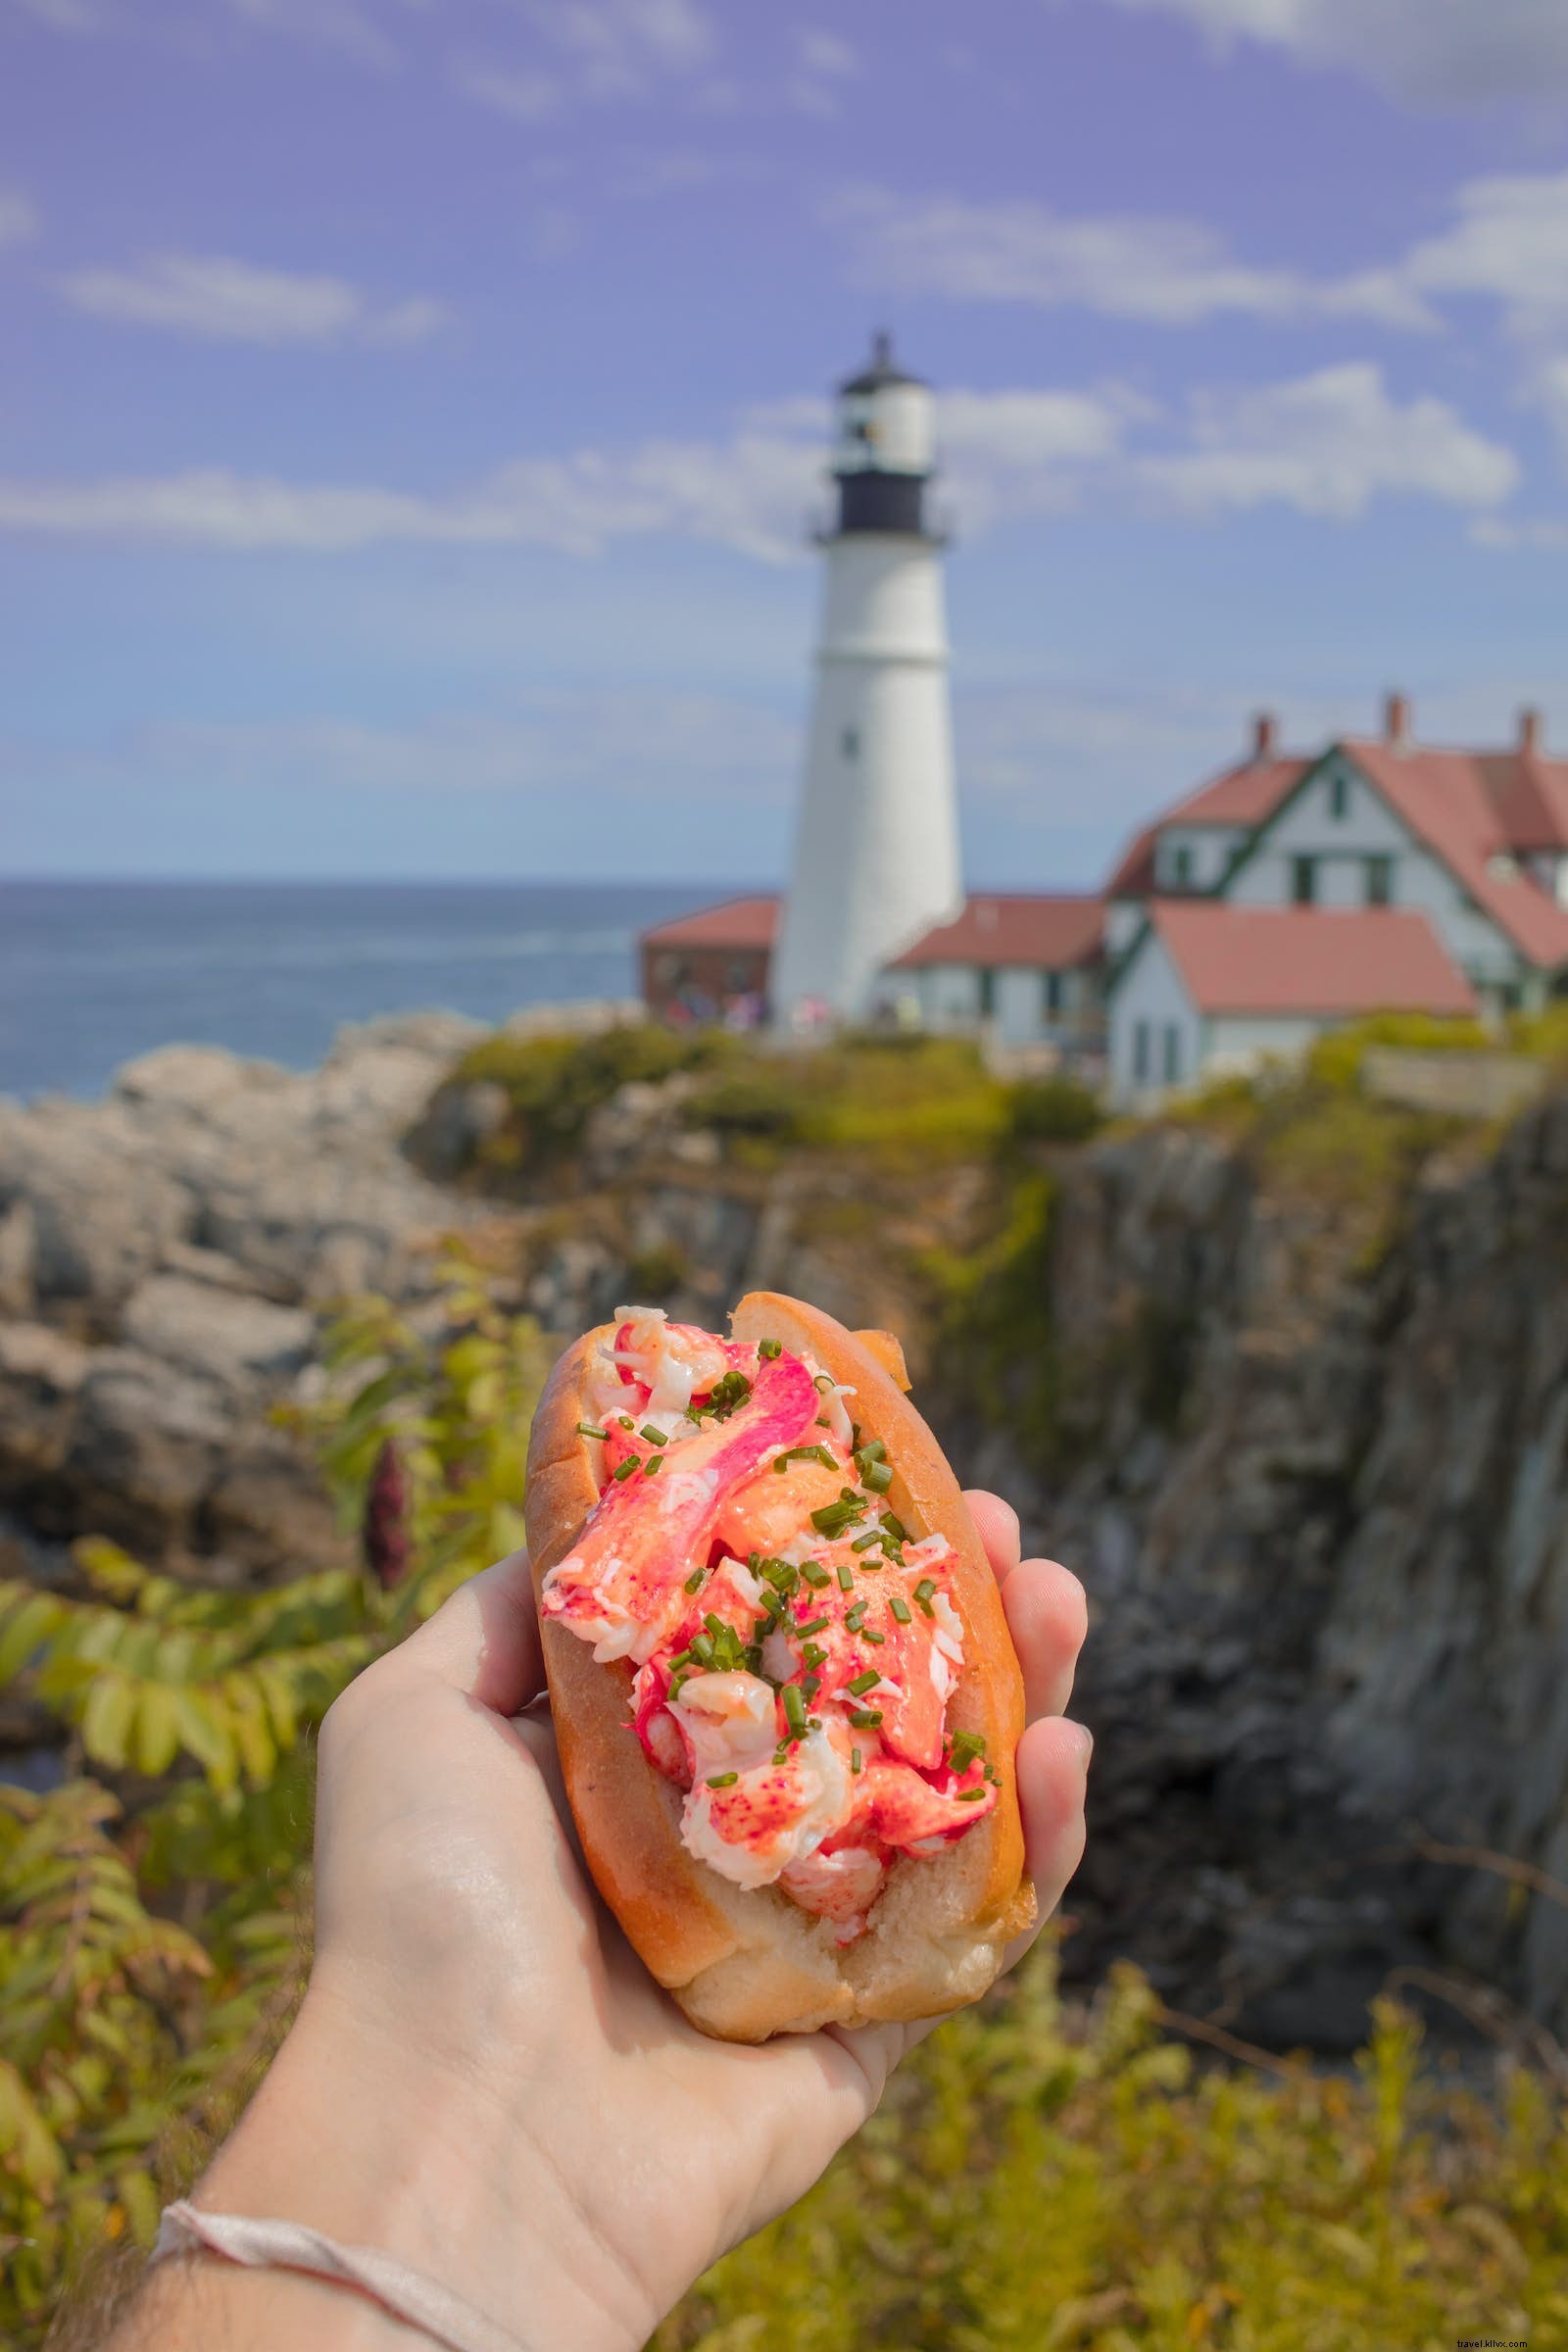 Produtos básicos da cidade de praia:sanduíches para comer à beira-mar 